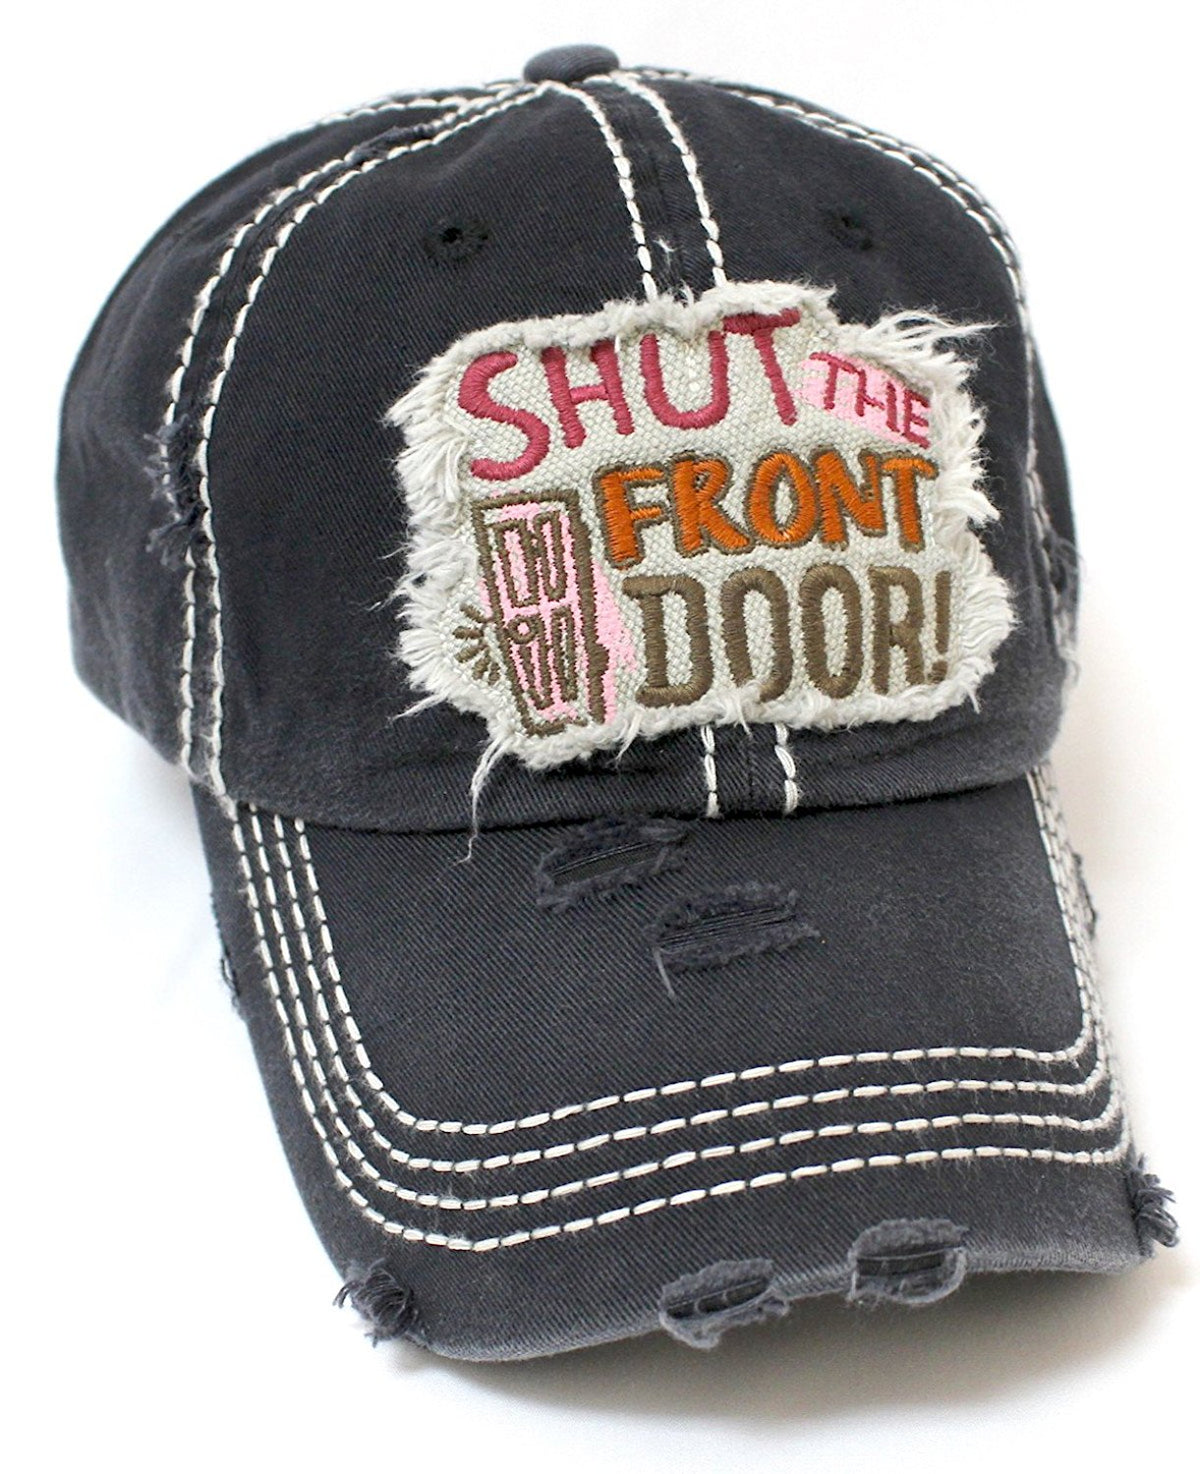 CAPS 'N VINTAGE Women's Black Shut The Front Door! Patch Embroidery Humor Baseball Hat - Caps 'N Vintage 